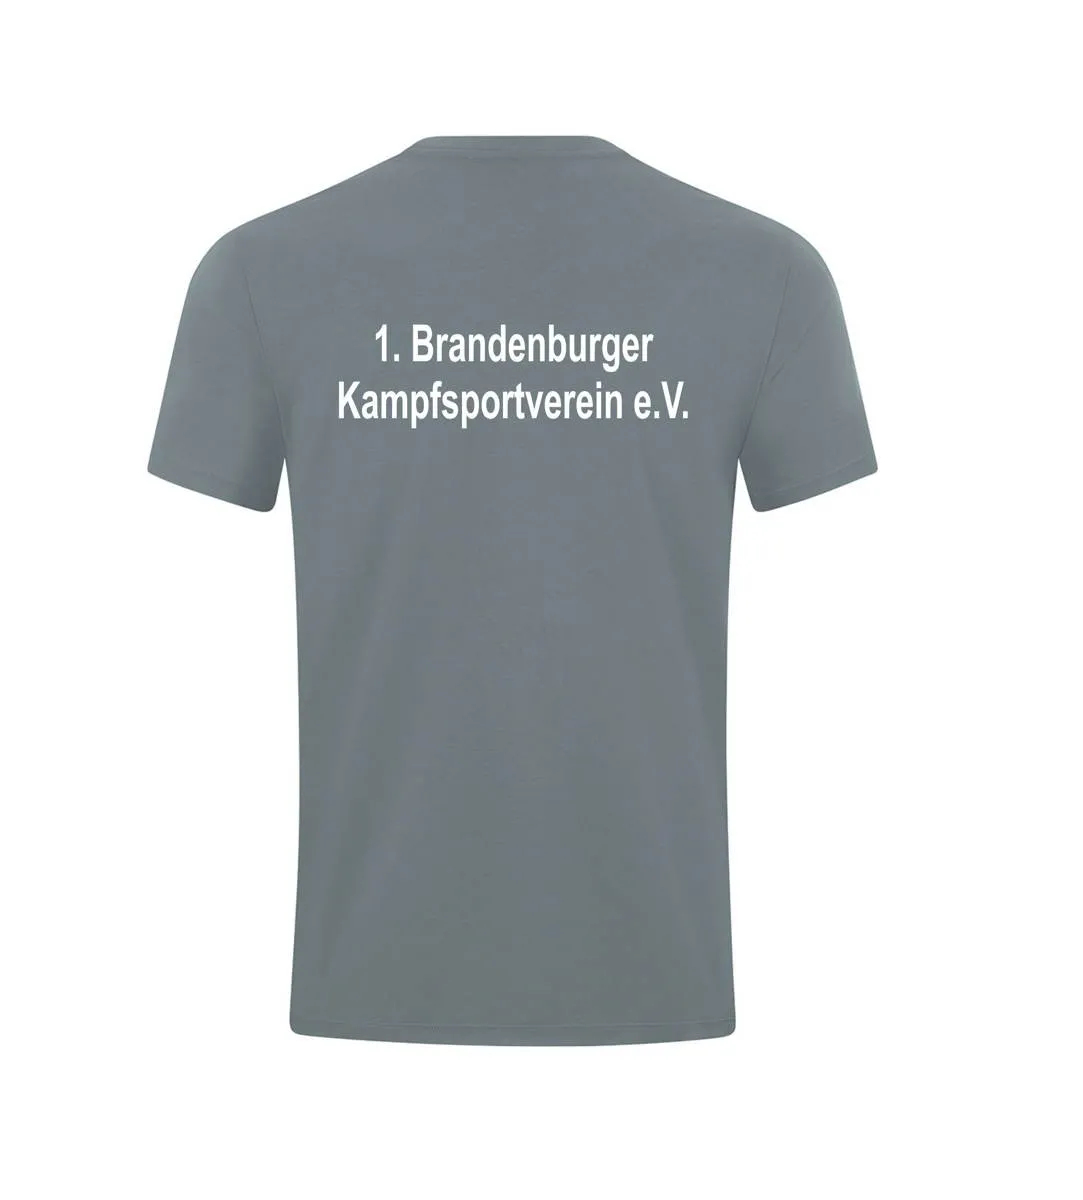 Camiseta JAKO Power gris Brandenburger Kampfsportverein